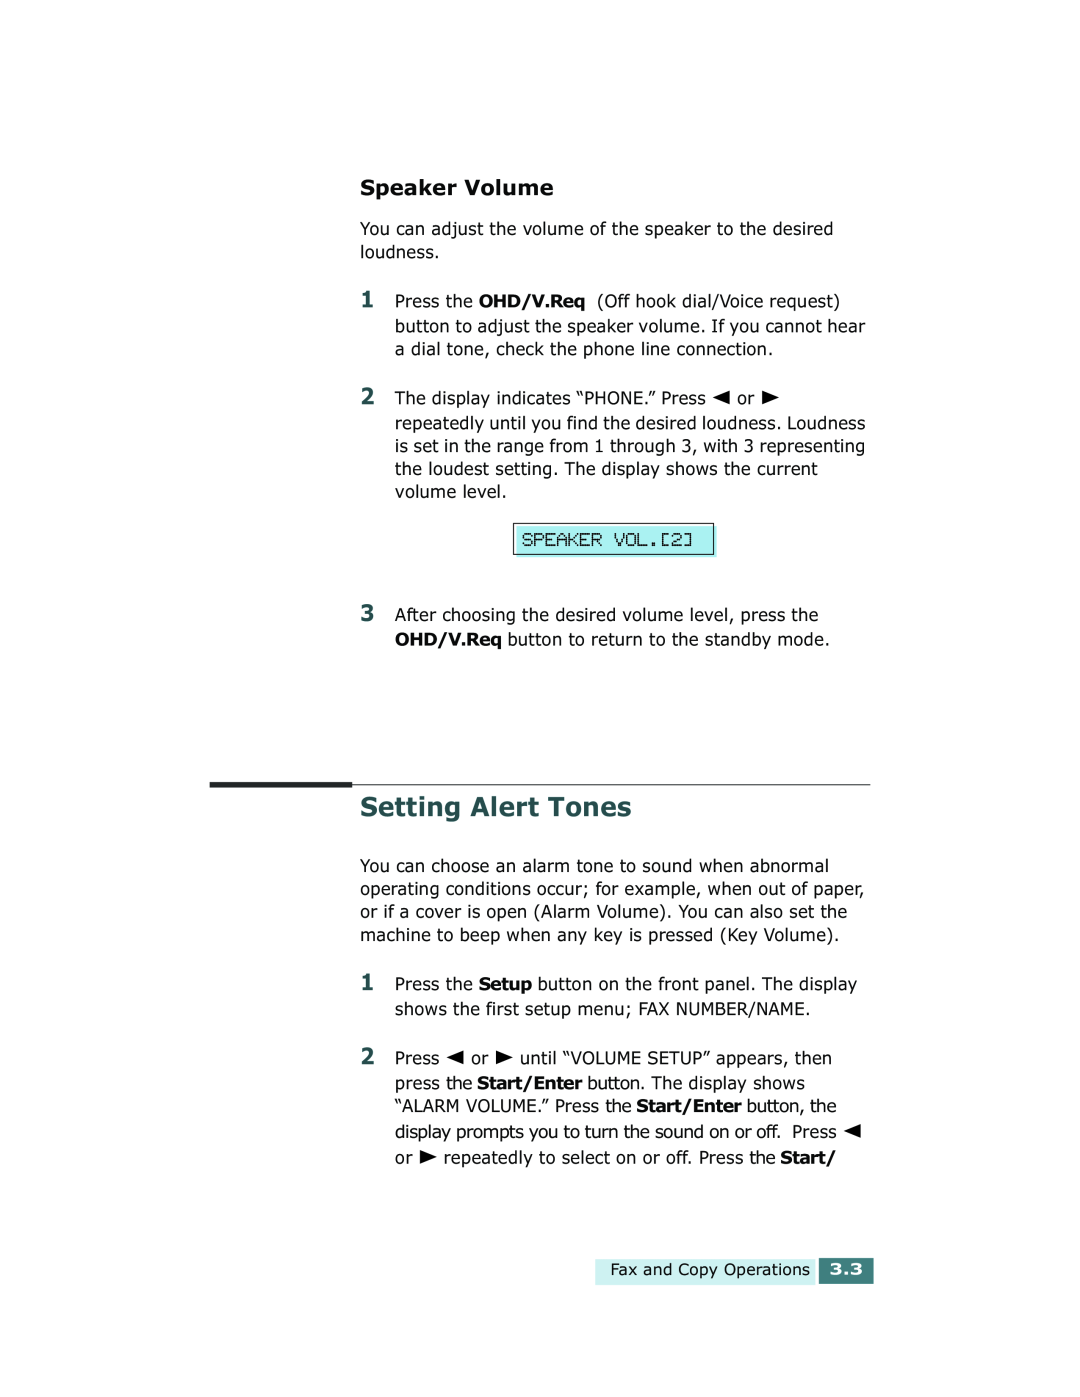 Xerox Pro 580 manual Setting Alert Tones, Speaker Volume 